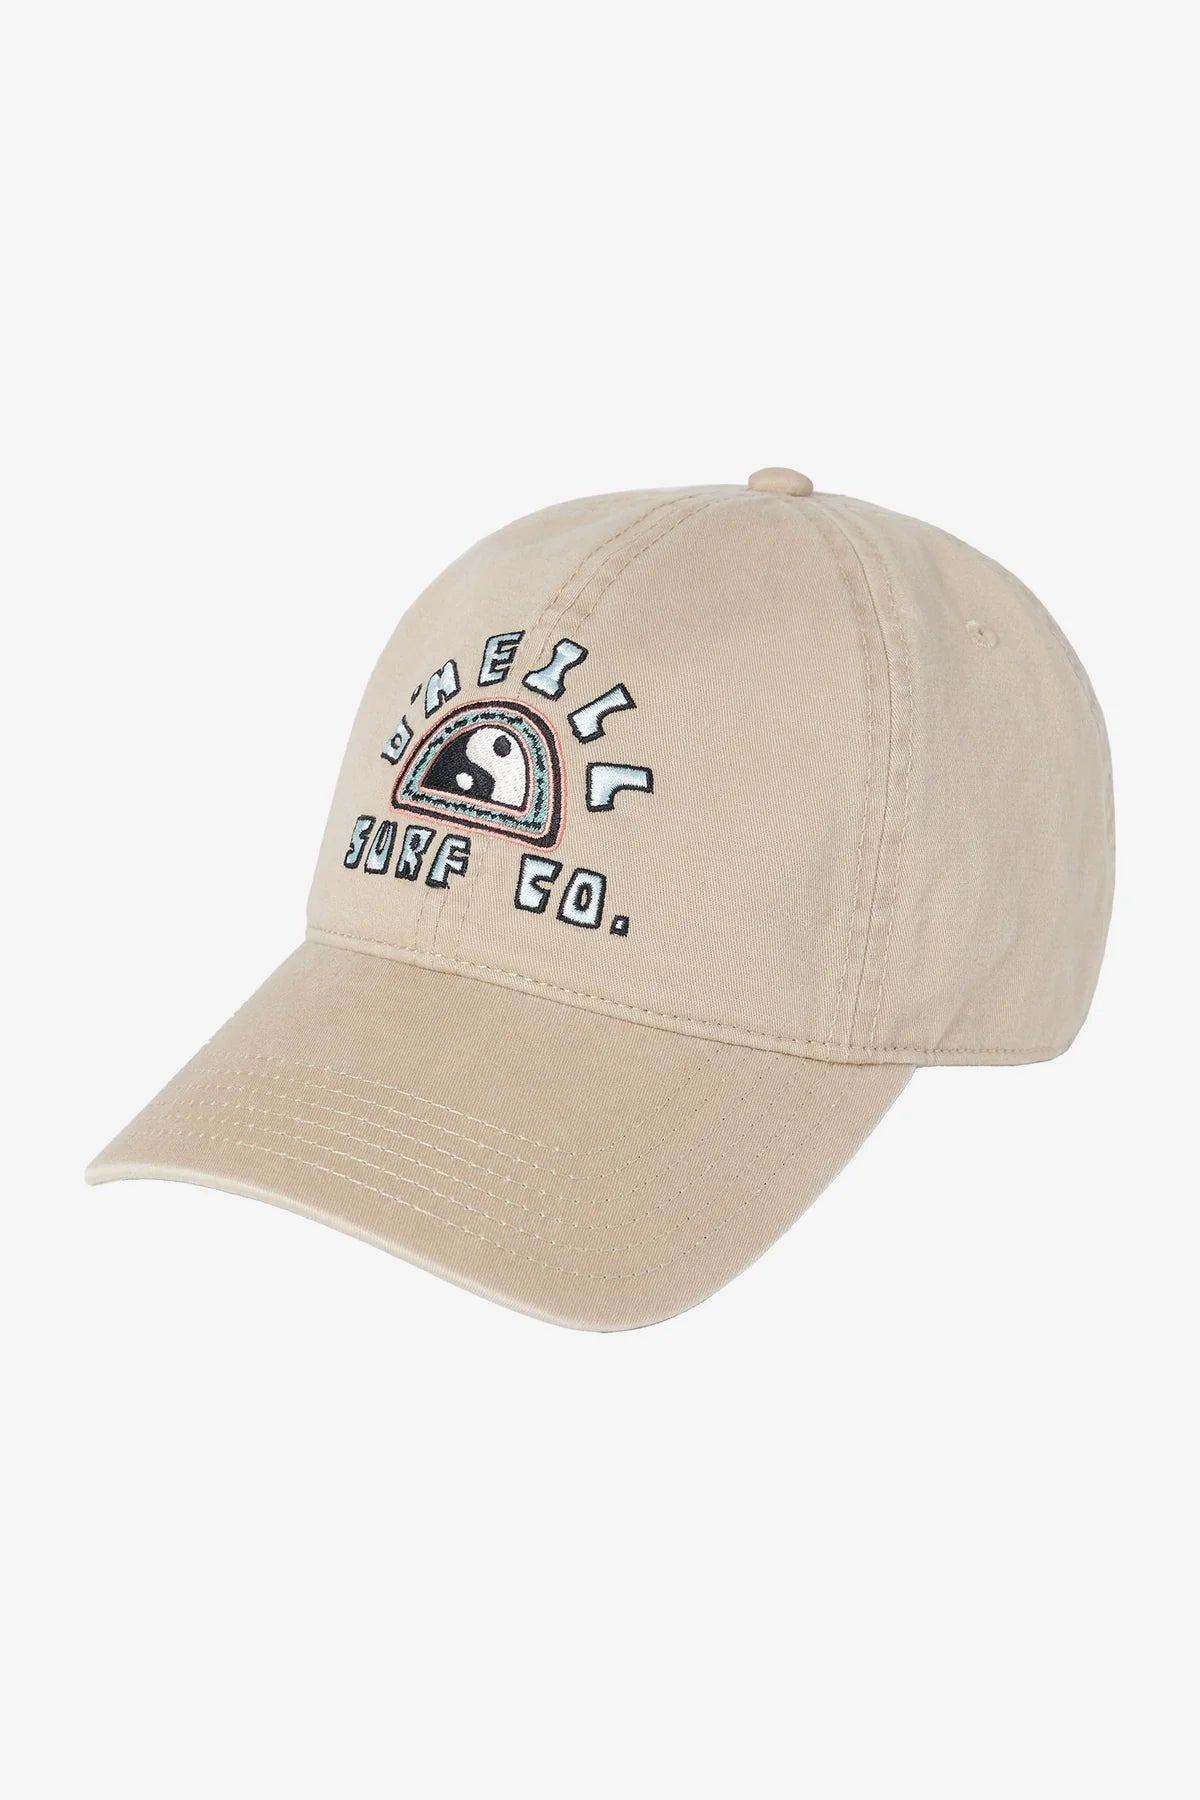 Irving dad hat